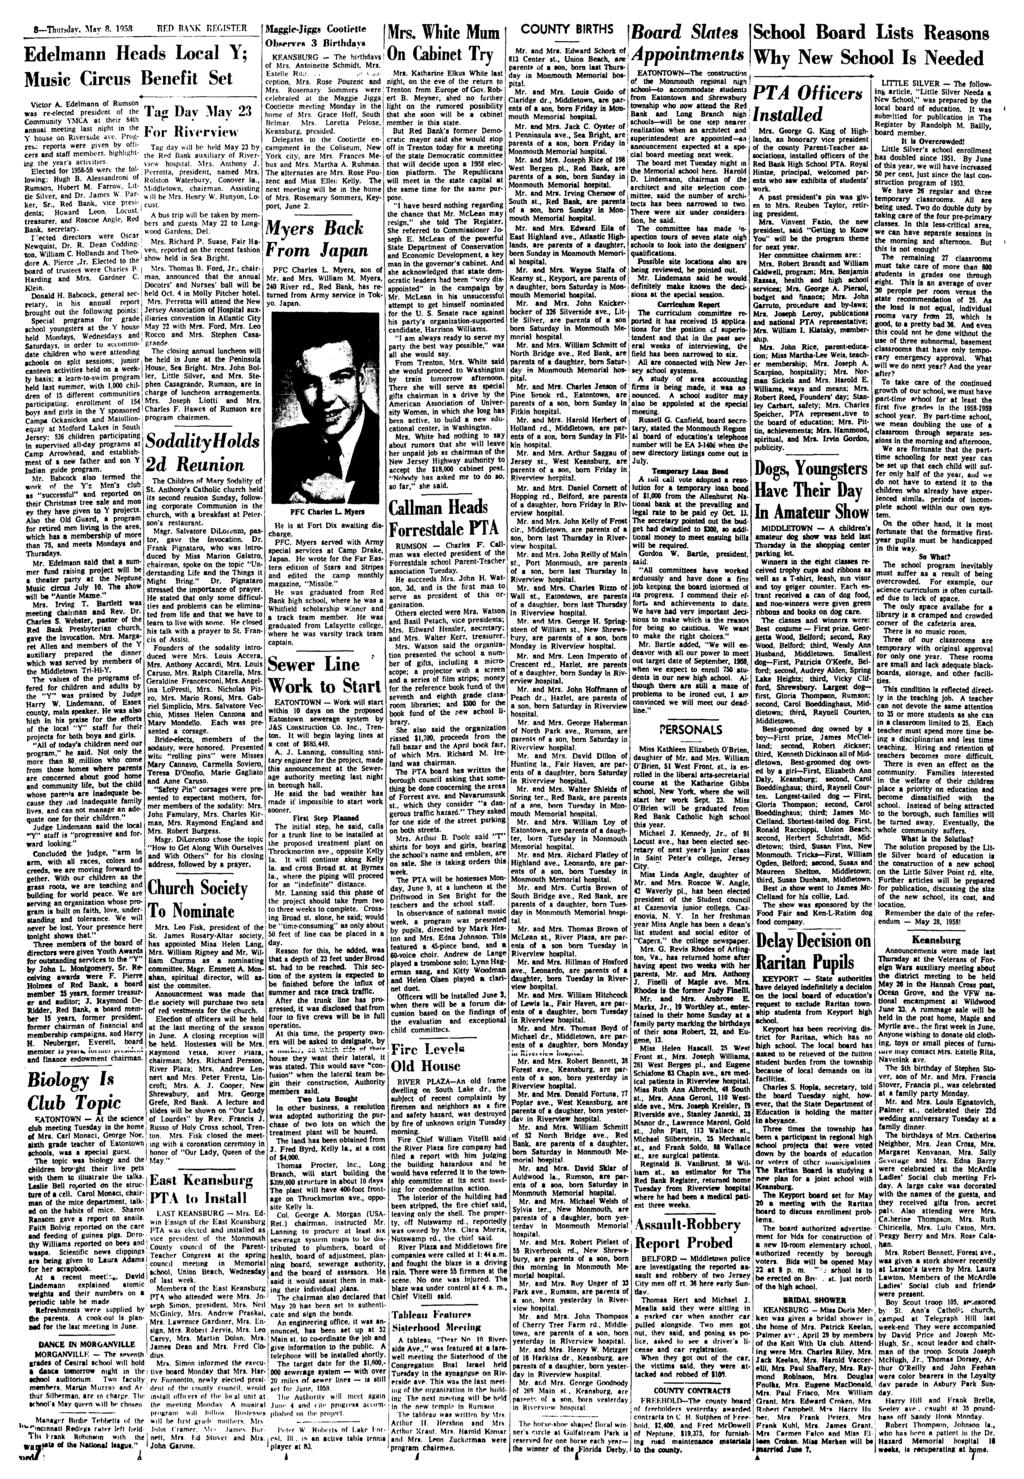 8 Thursday. Mar 8, 1953 REP BANK REGISTER Edelmann Heads Local Y; Music Circus Benefit Set Victor A.